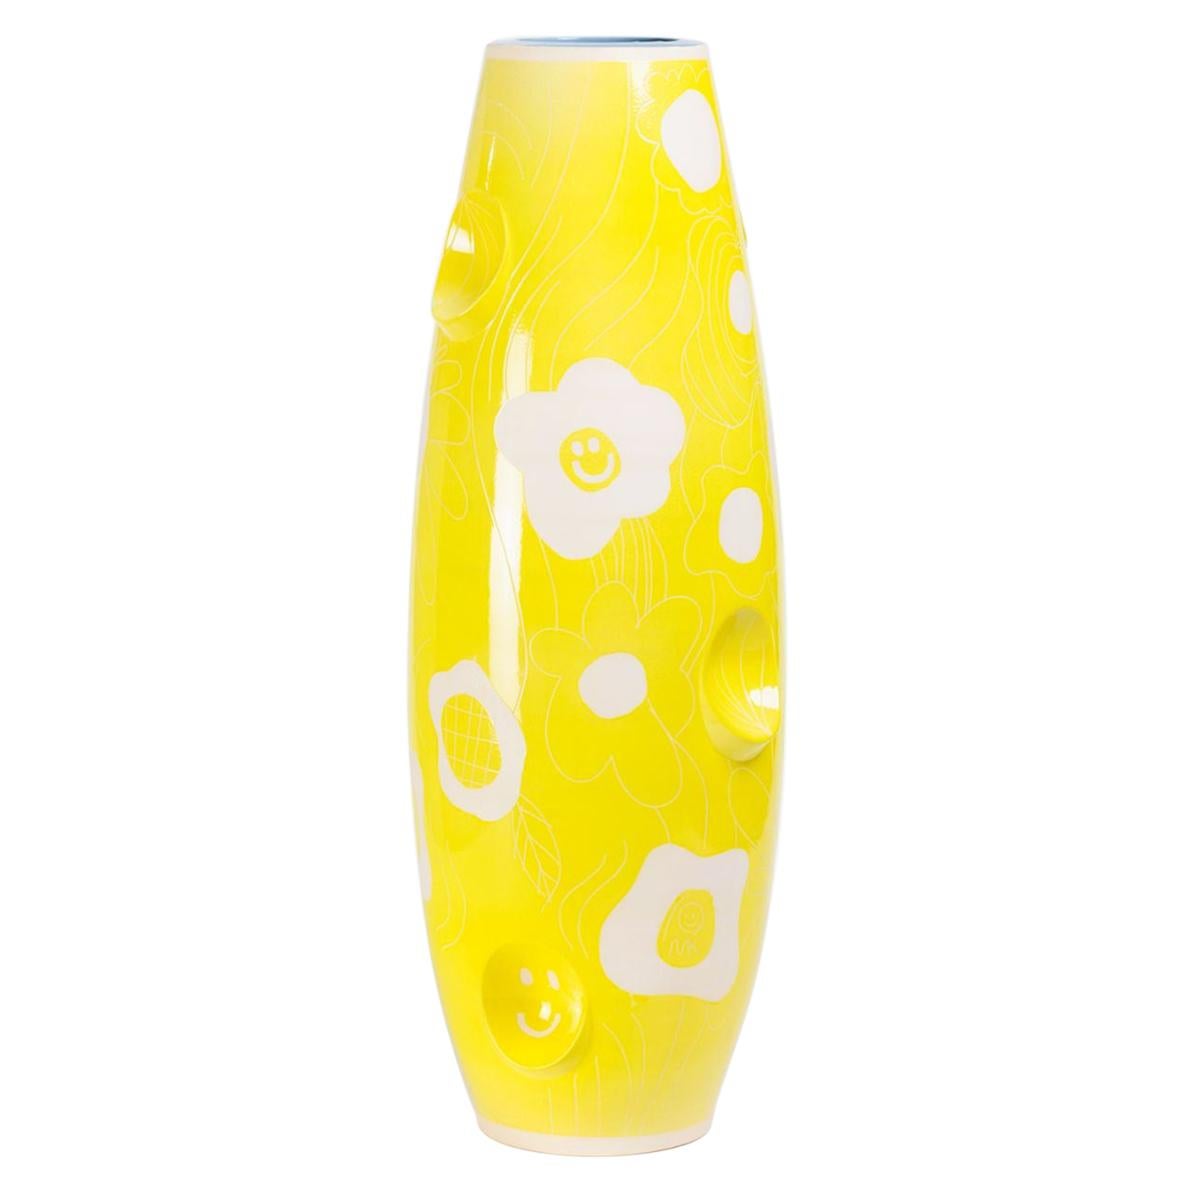 Teresa Pop Ceramic Vase by Malwina Konopacka